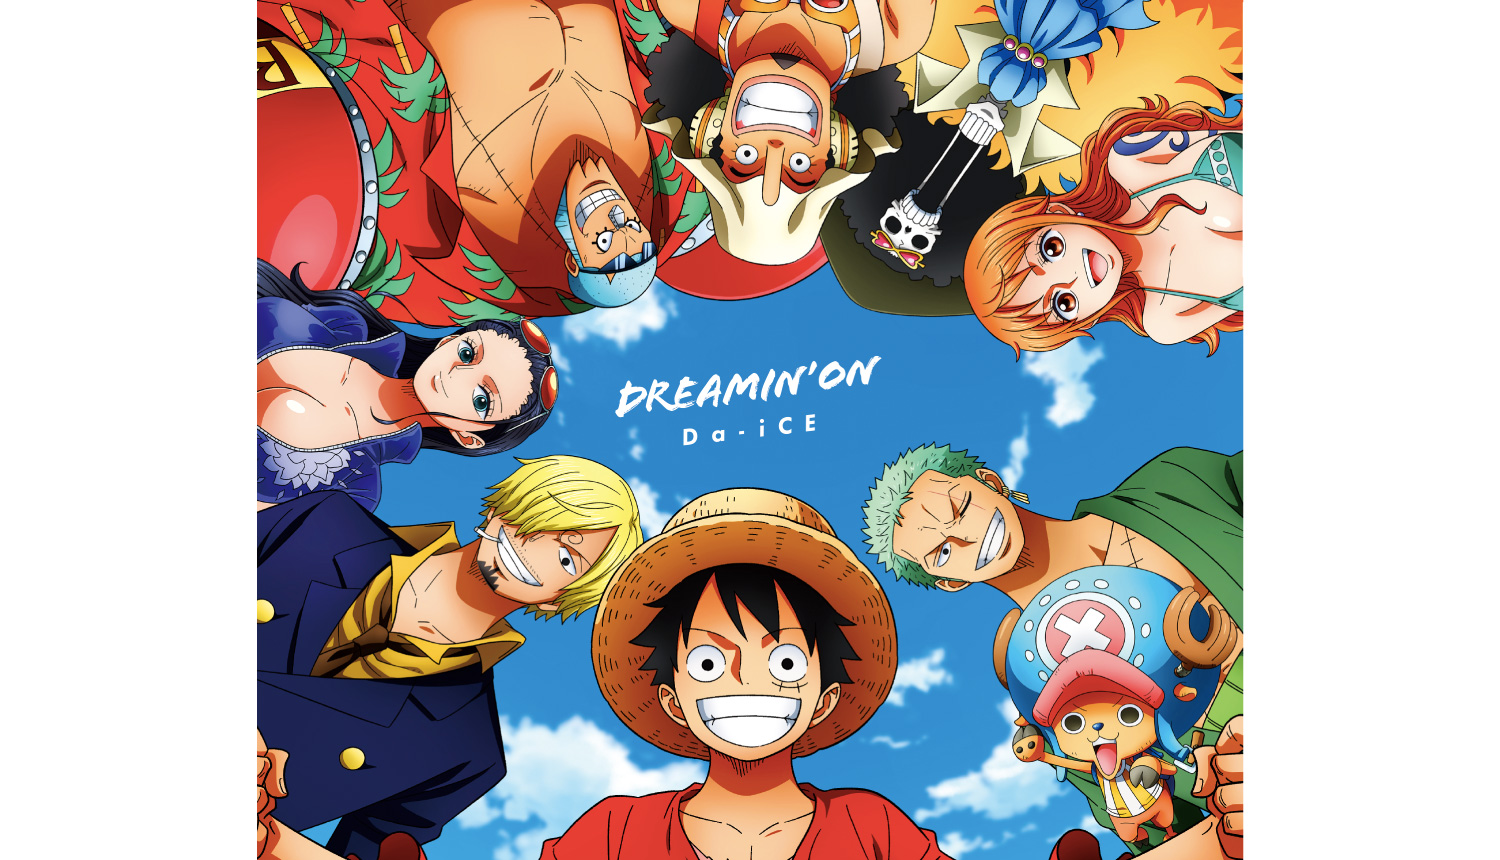 Da Ice動畫 One Piece航海王 主題曲封面公開 Moshi Moshi Nippon もしもしにっぽん